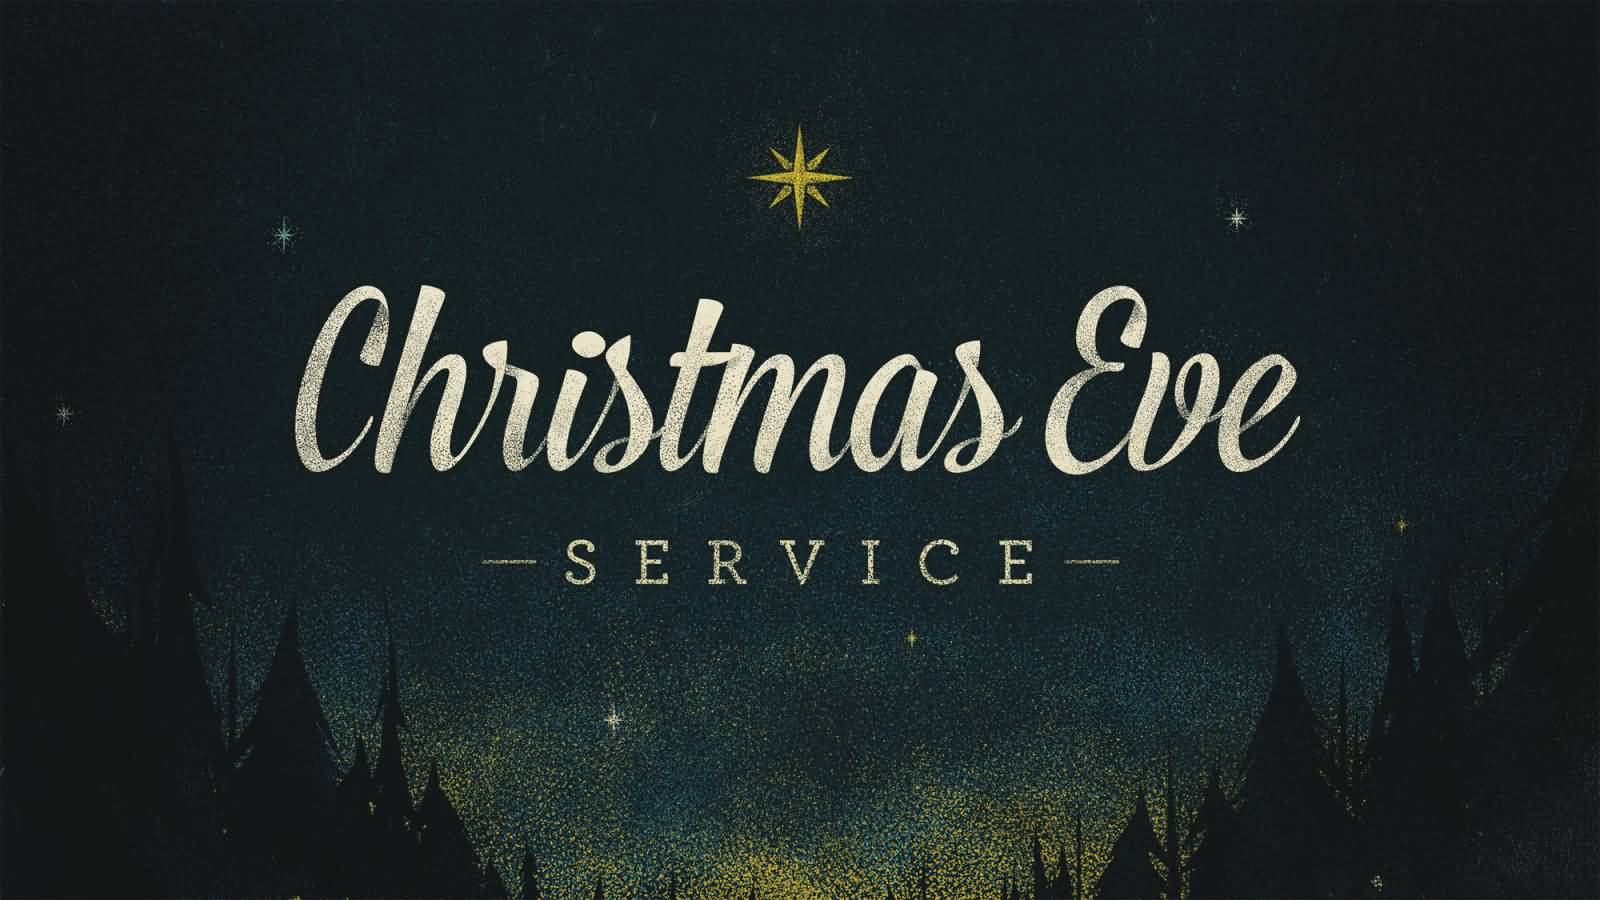 Christmas Eve Service Ideas
 50 Best Christmas Eve Greeting